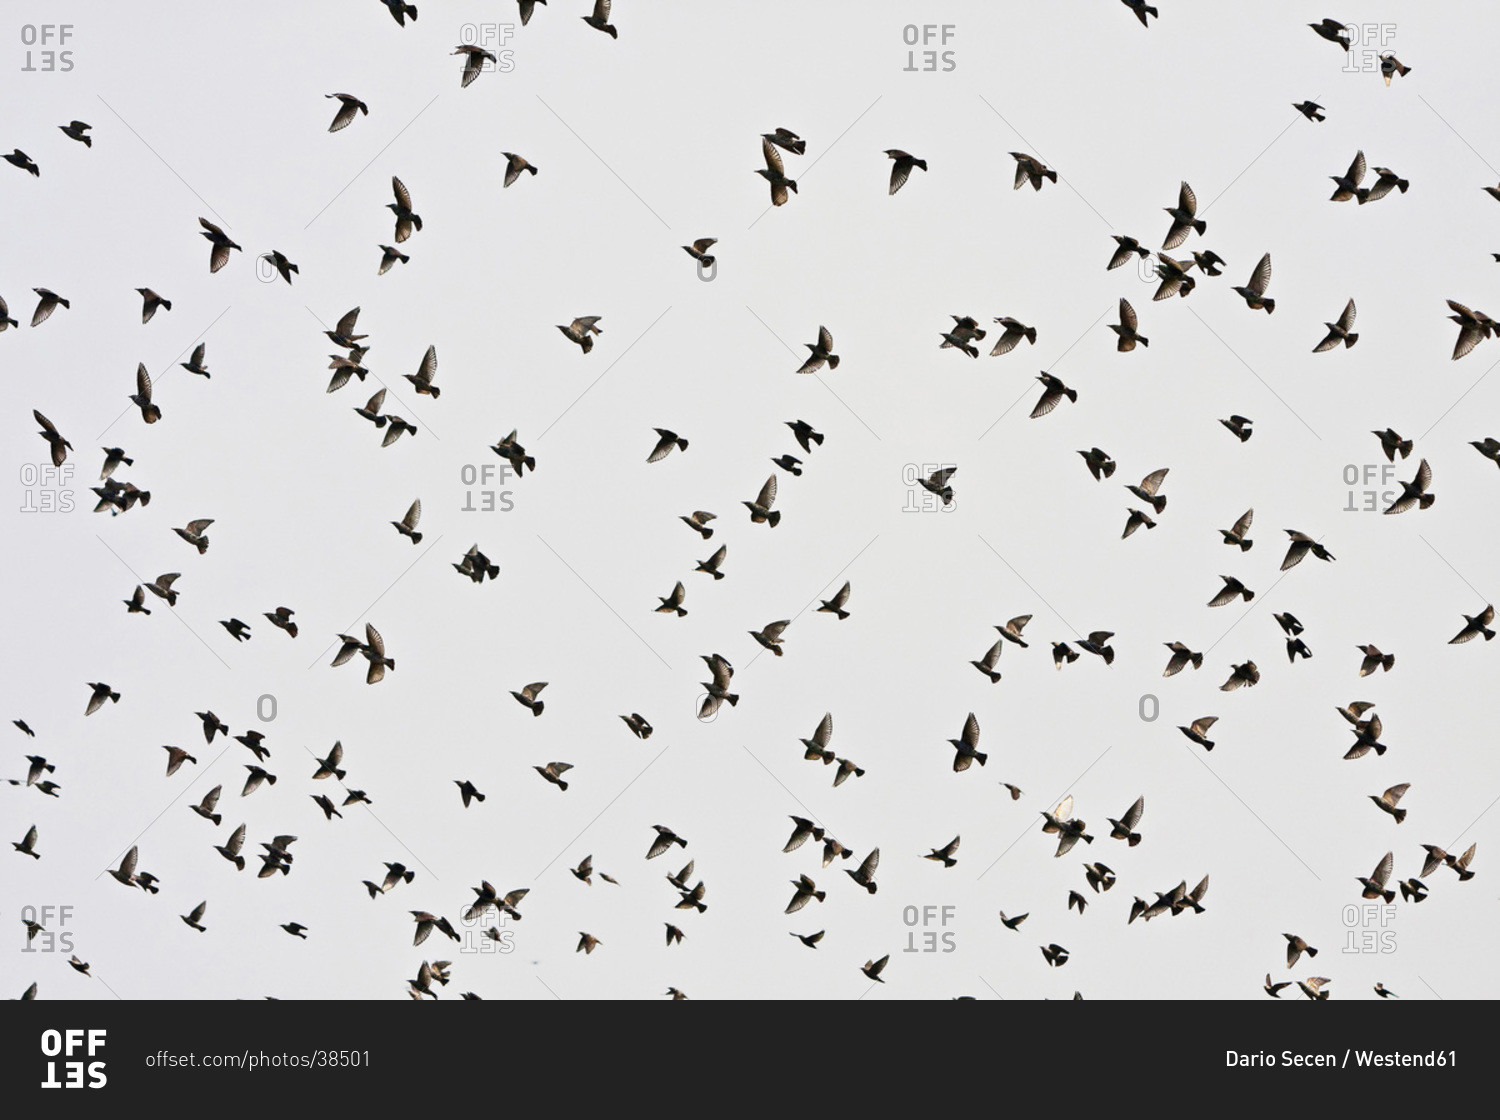 Croatia, Aljmas, View of migrating birds